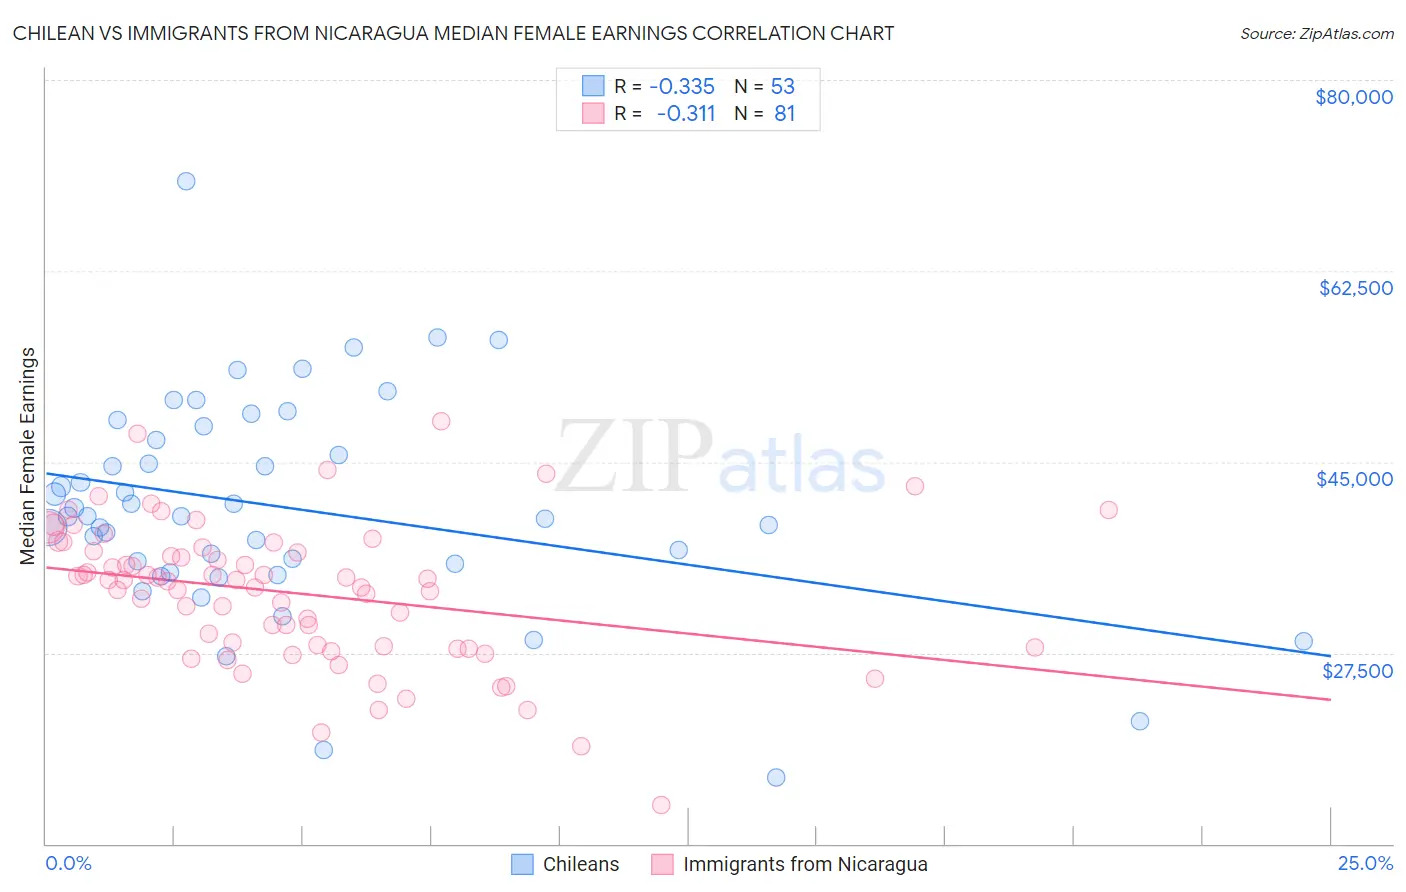 Chilean vs Immigrants from Nicaragua Median Female Earnings